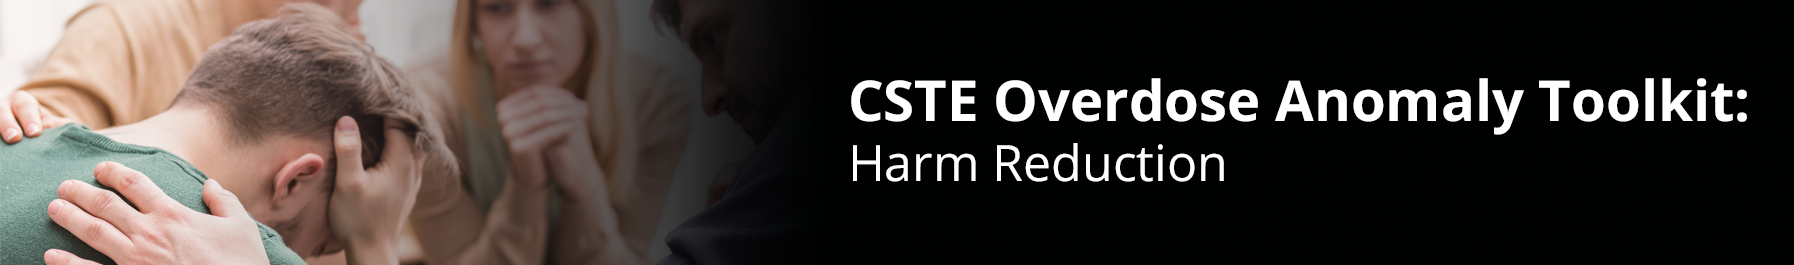 CSTE Overdose Anomaly Toolkit: Harm Reduction Data